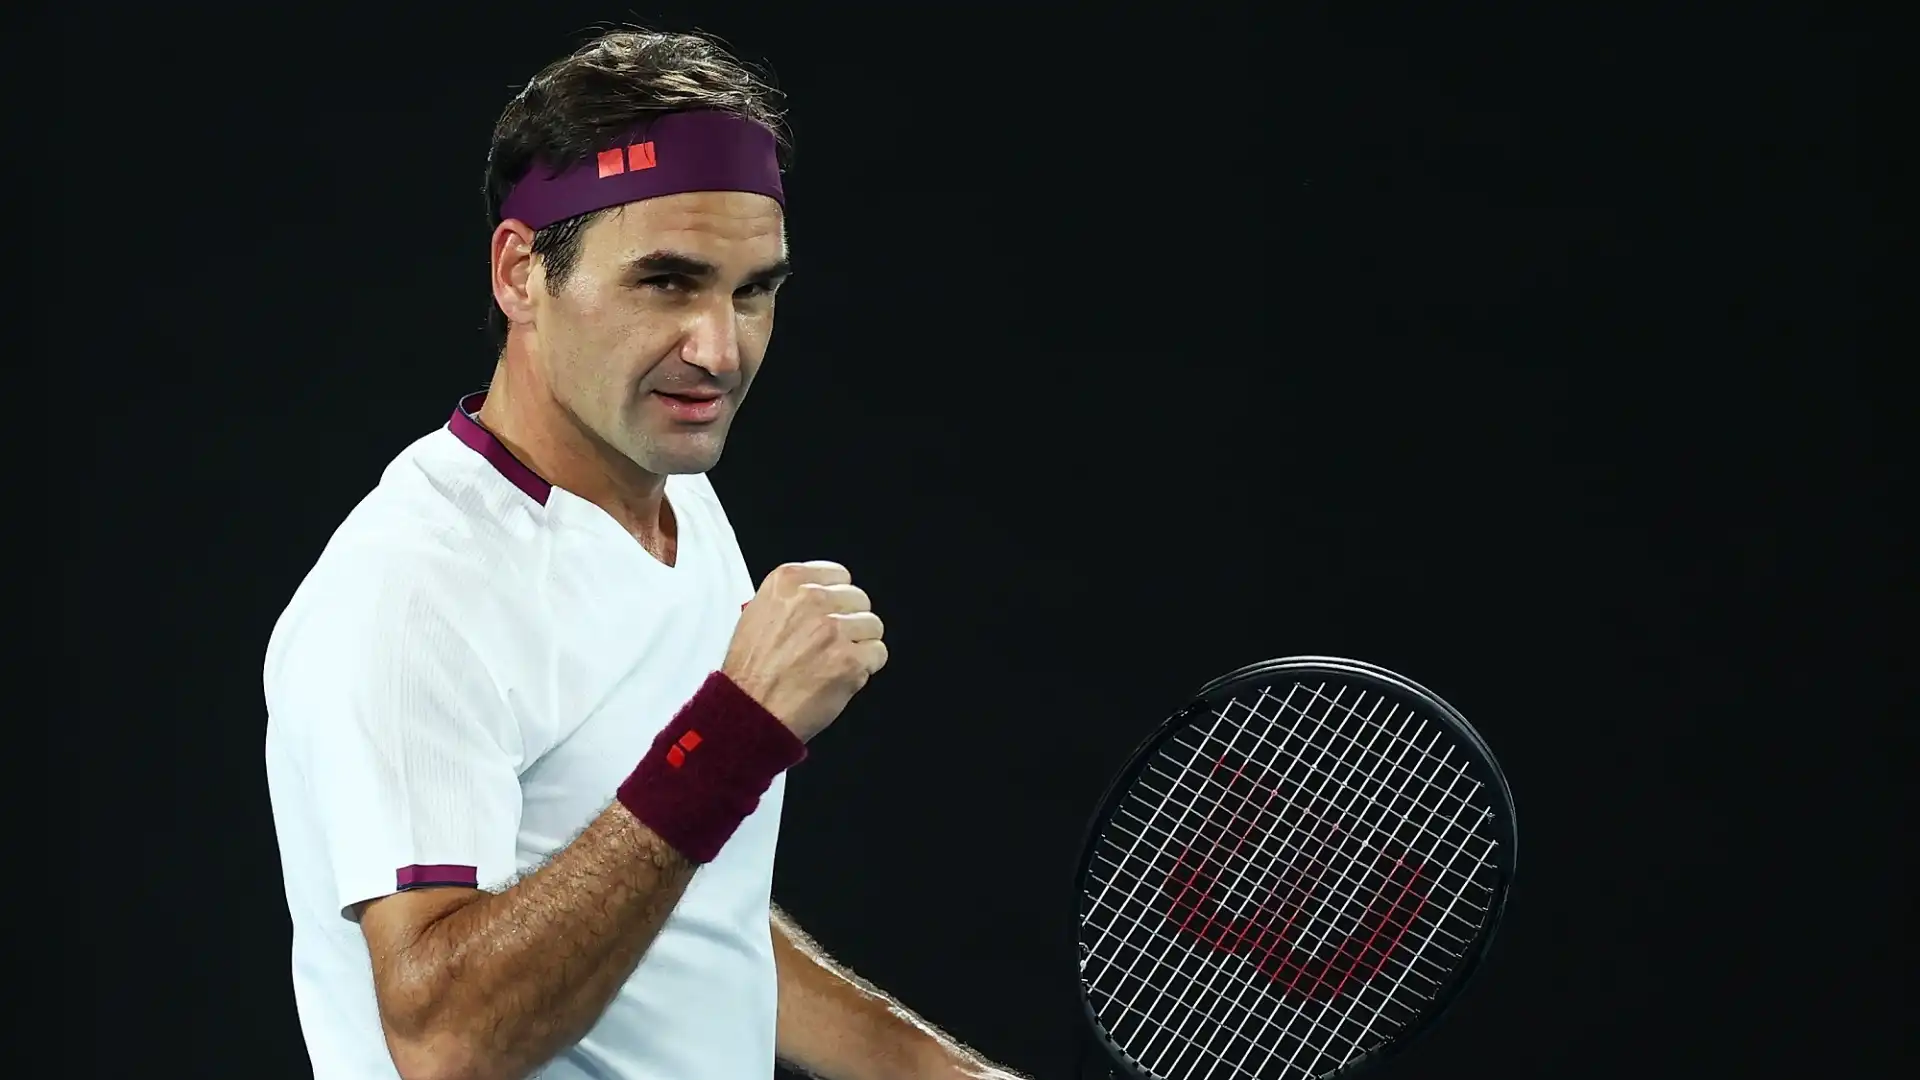 2020: Roger Federer (Tennis), guadagni totali stimati 106,3 milioni di dollari